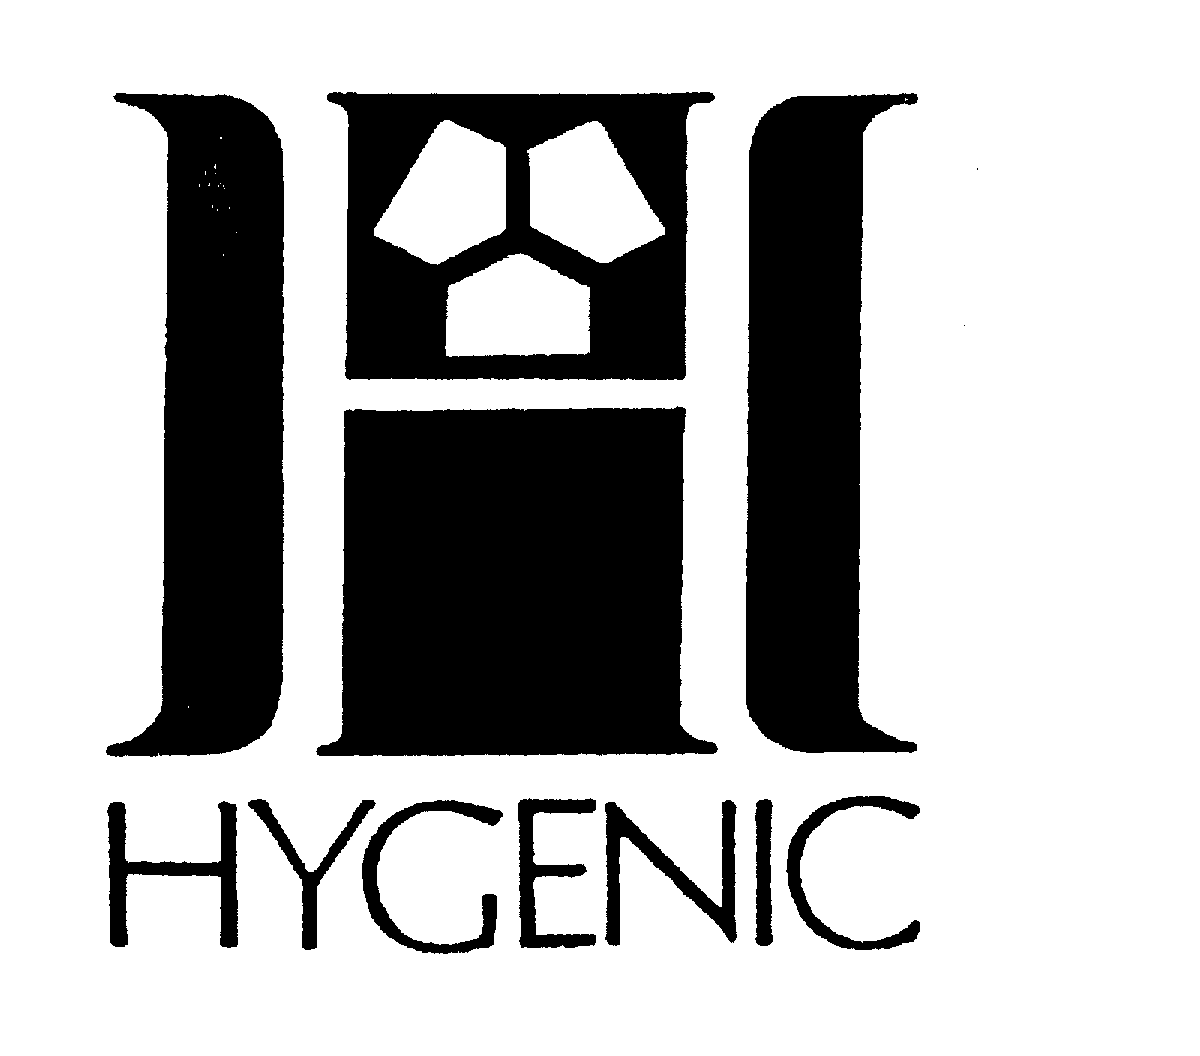  H HYGENIC